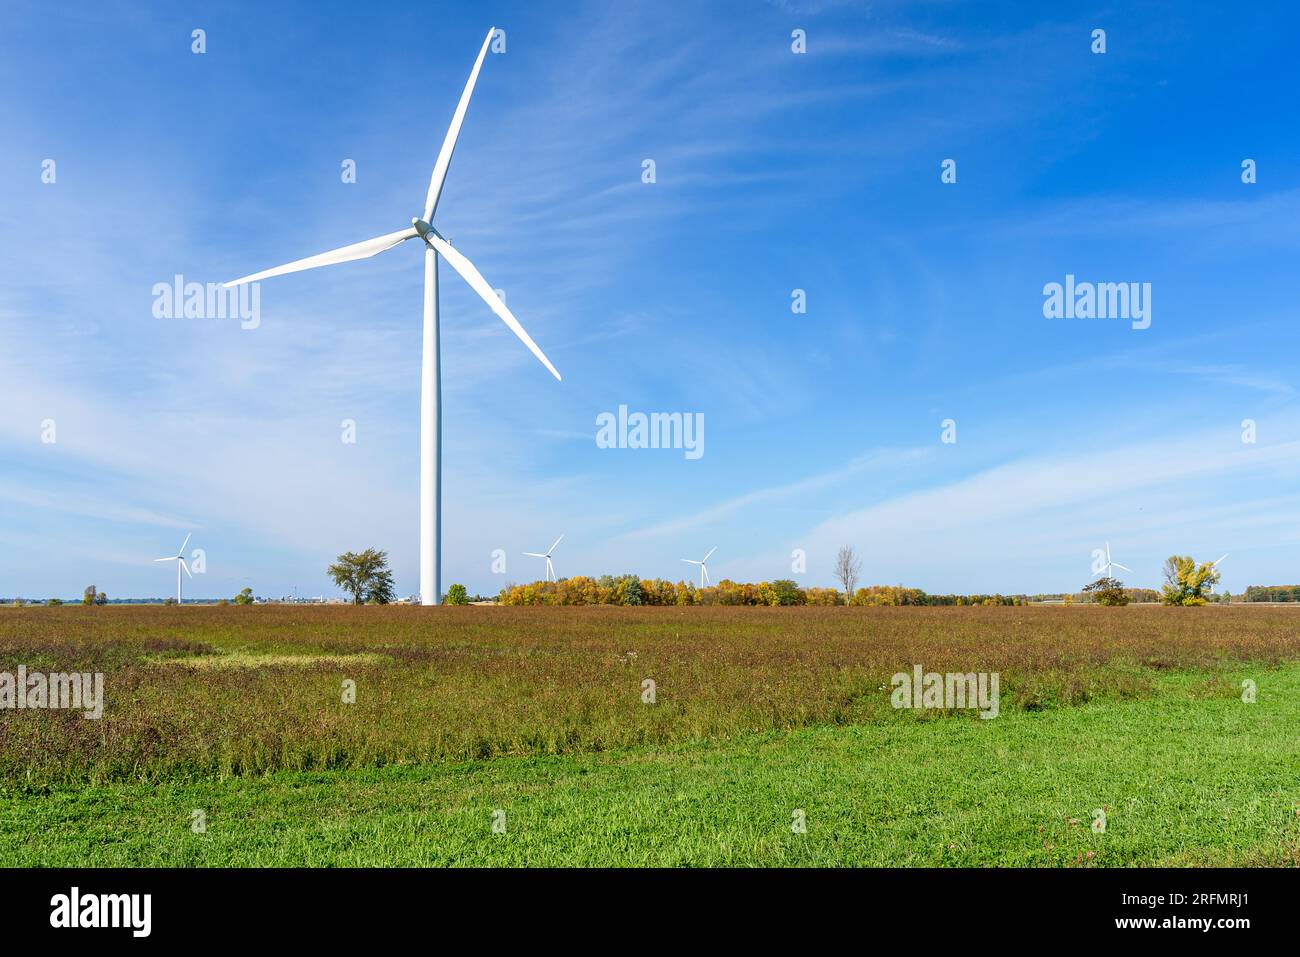 Wind turbines in a grassy field under blue sky in autumn Stock Photo